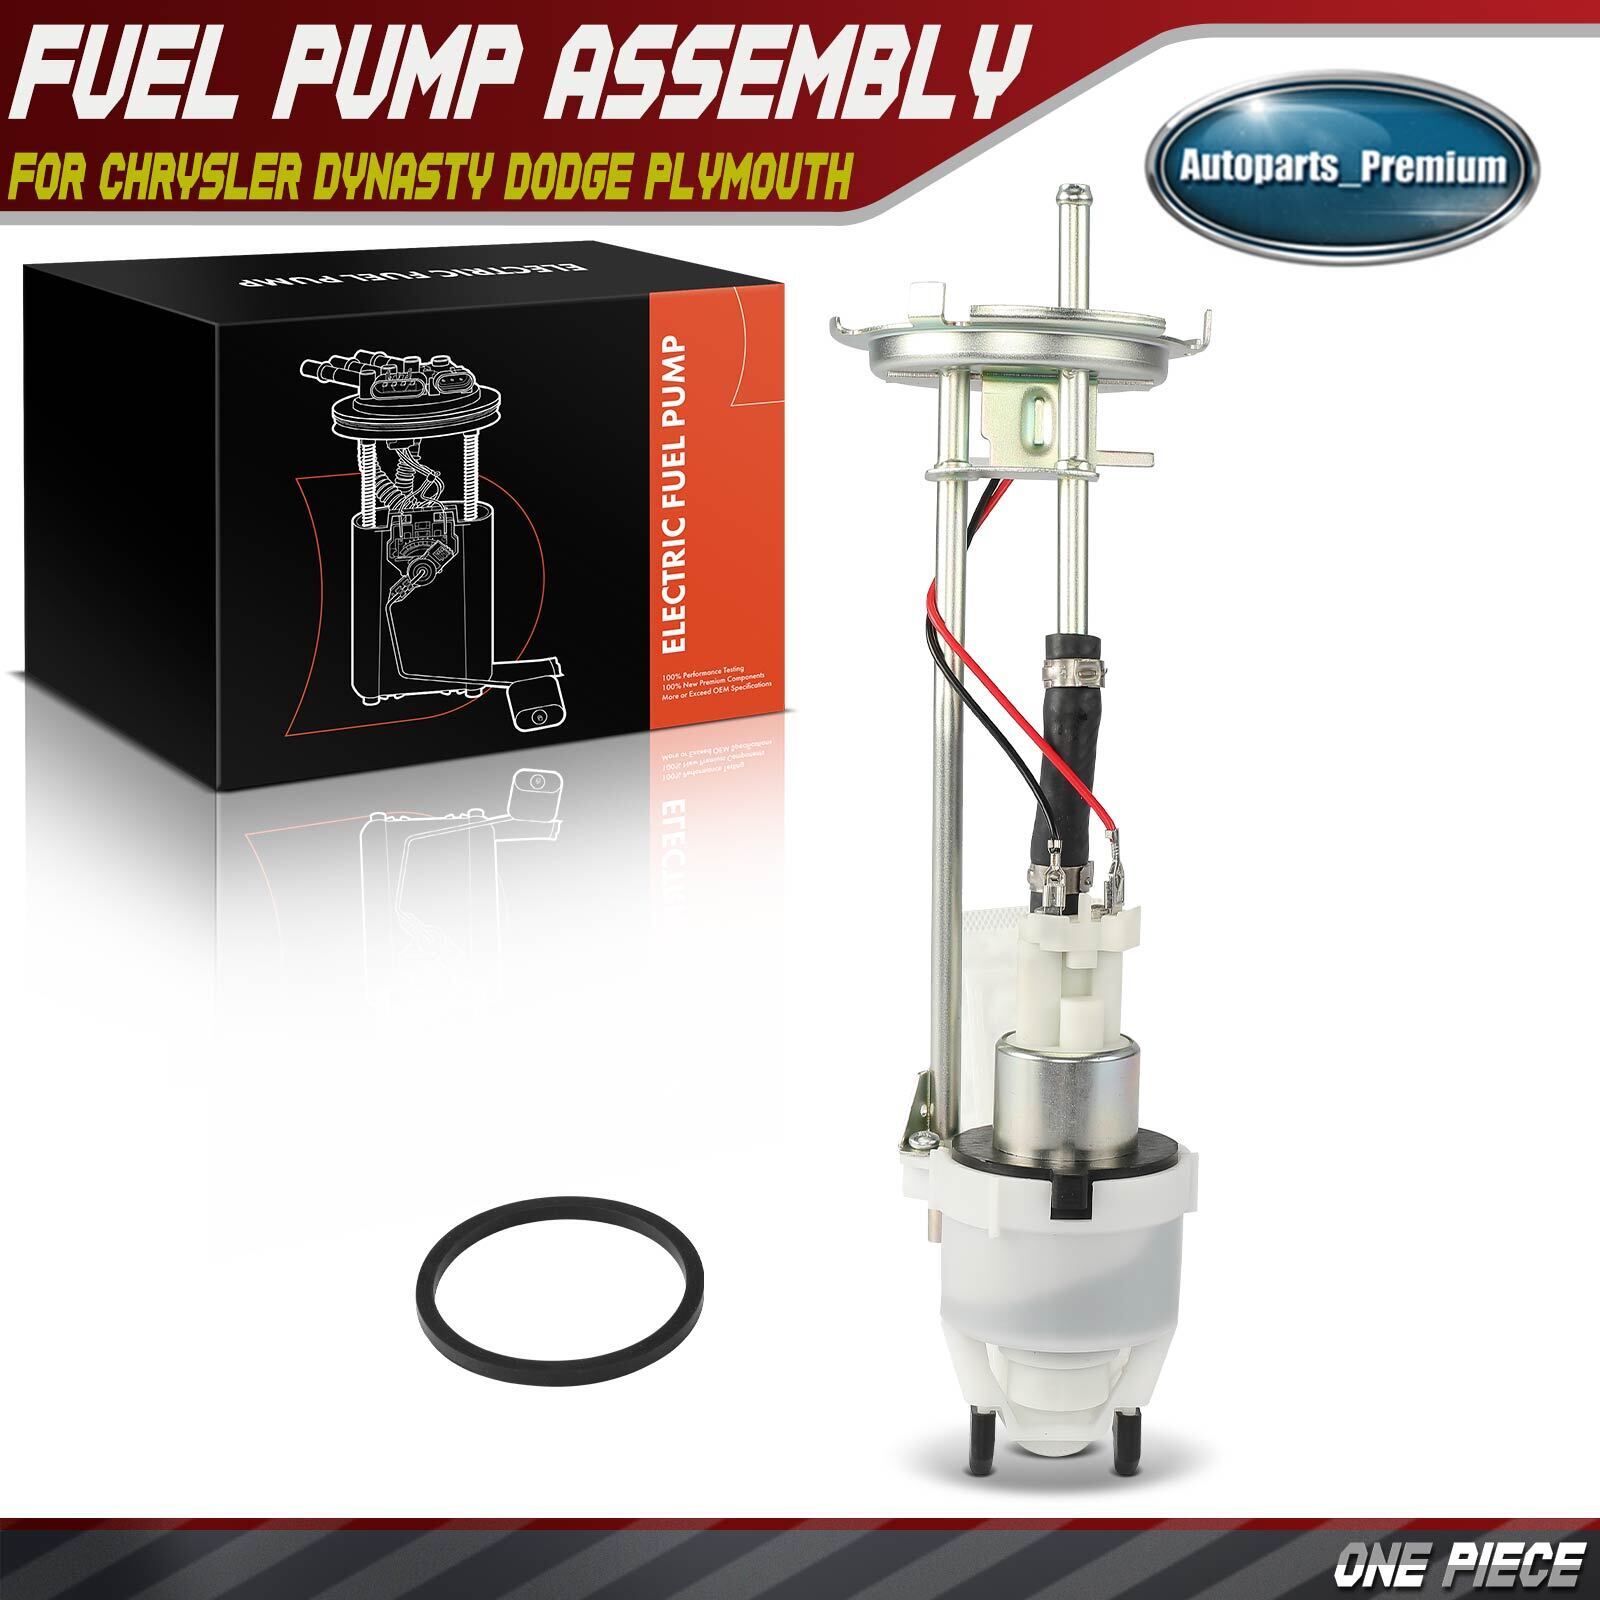 Fuel Pump Assembly for Chrysler Dodge Plymouth Laser Daytona Caravelle 2.2L 2.5L